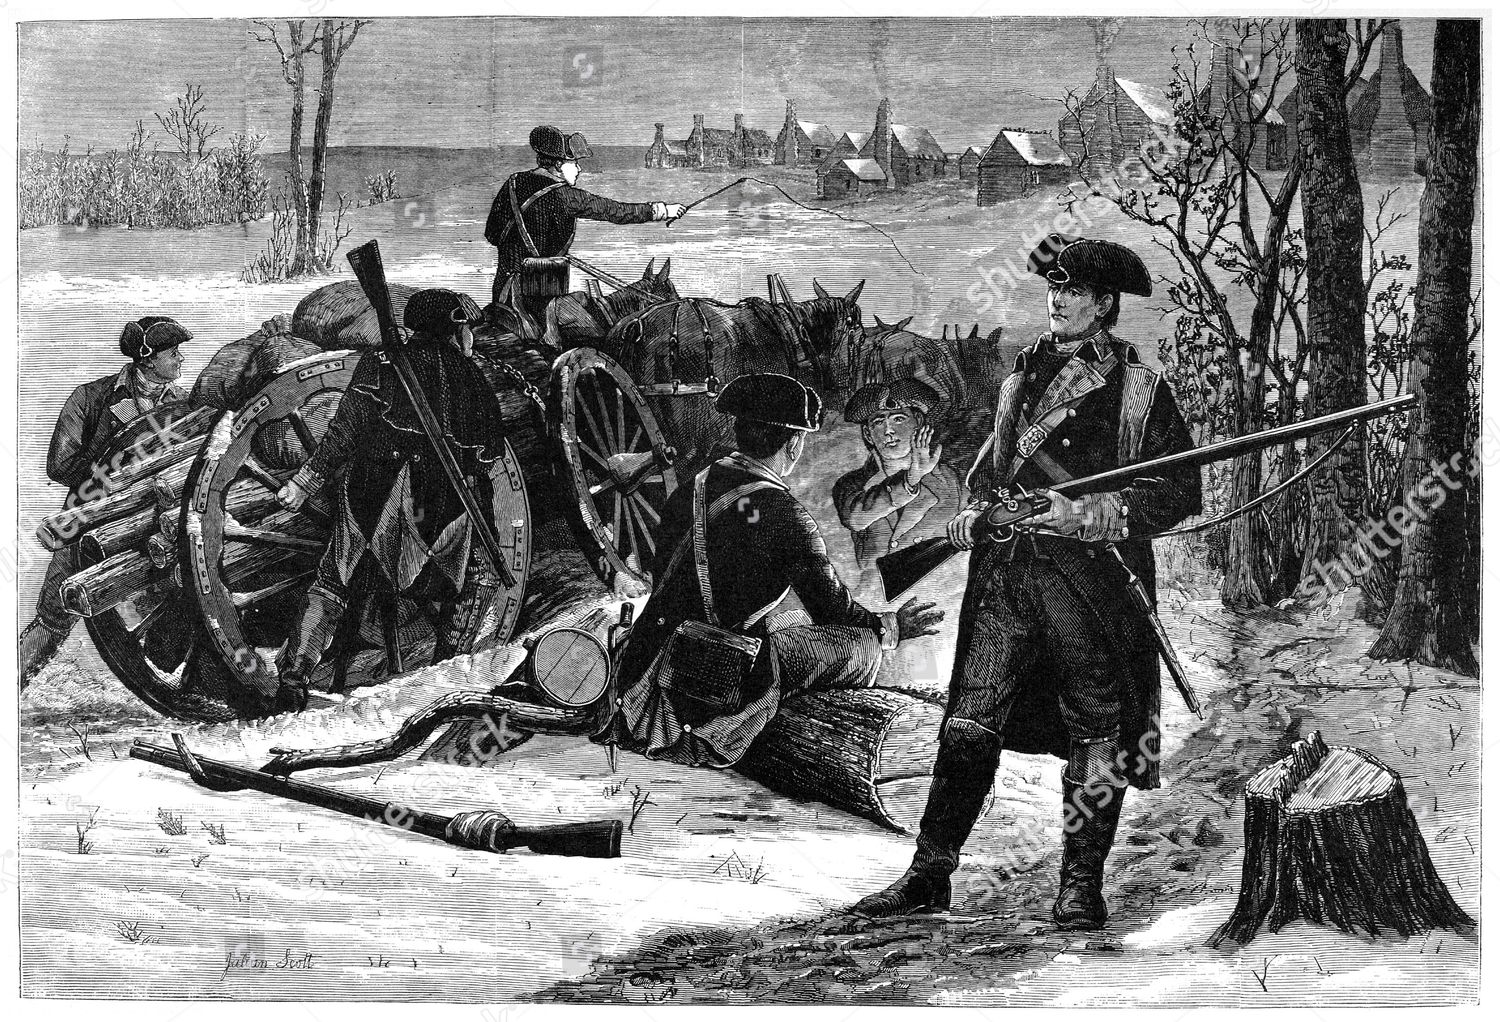 Valley Forge Winter 1777 Wagon Carrying Logs: редакционная стоковая фотогра...